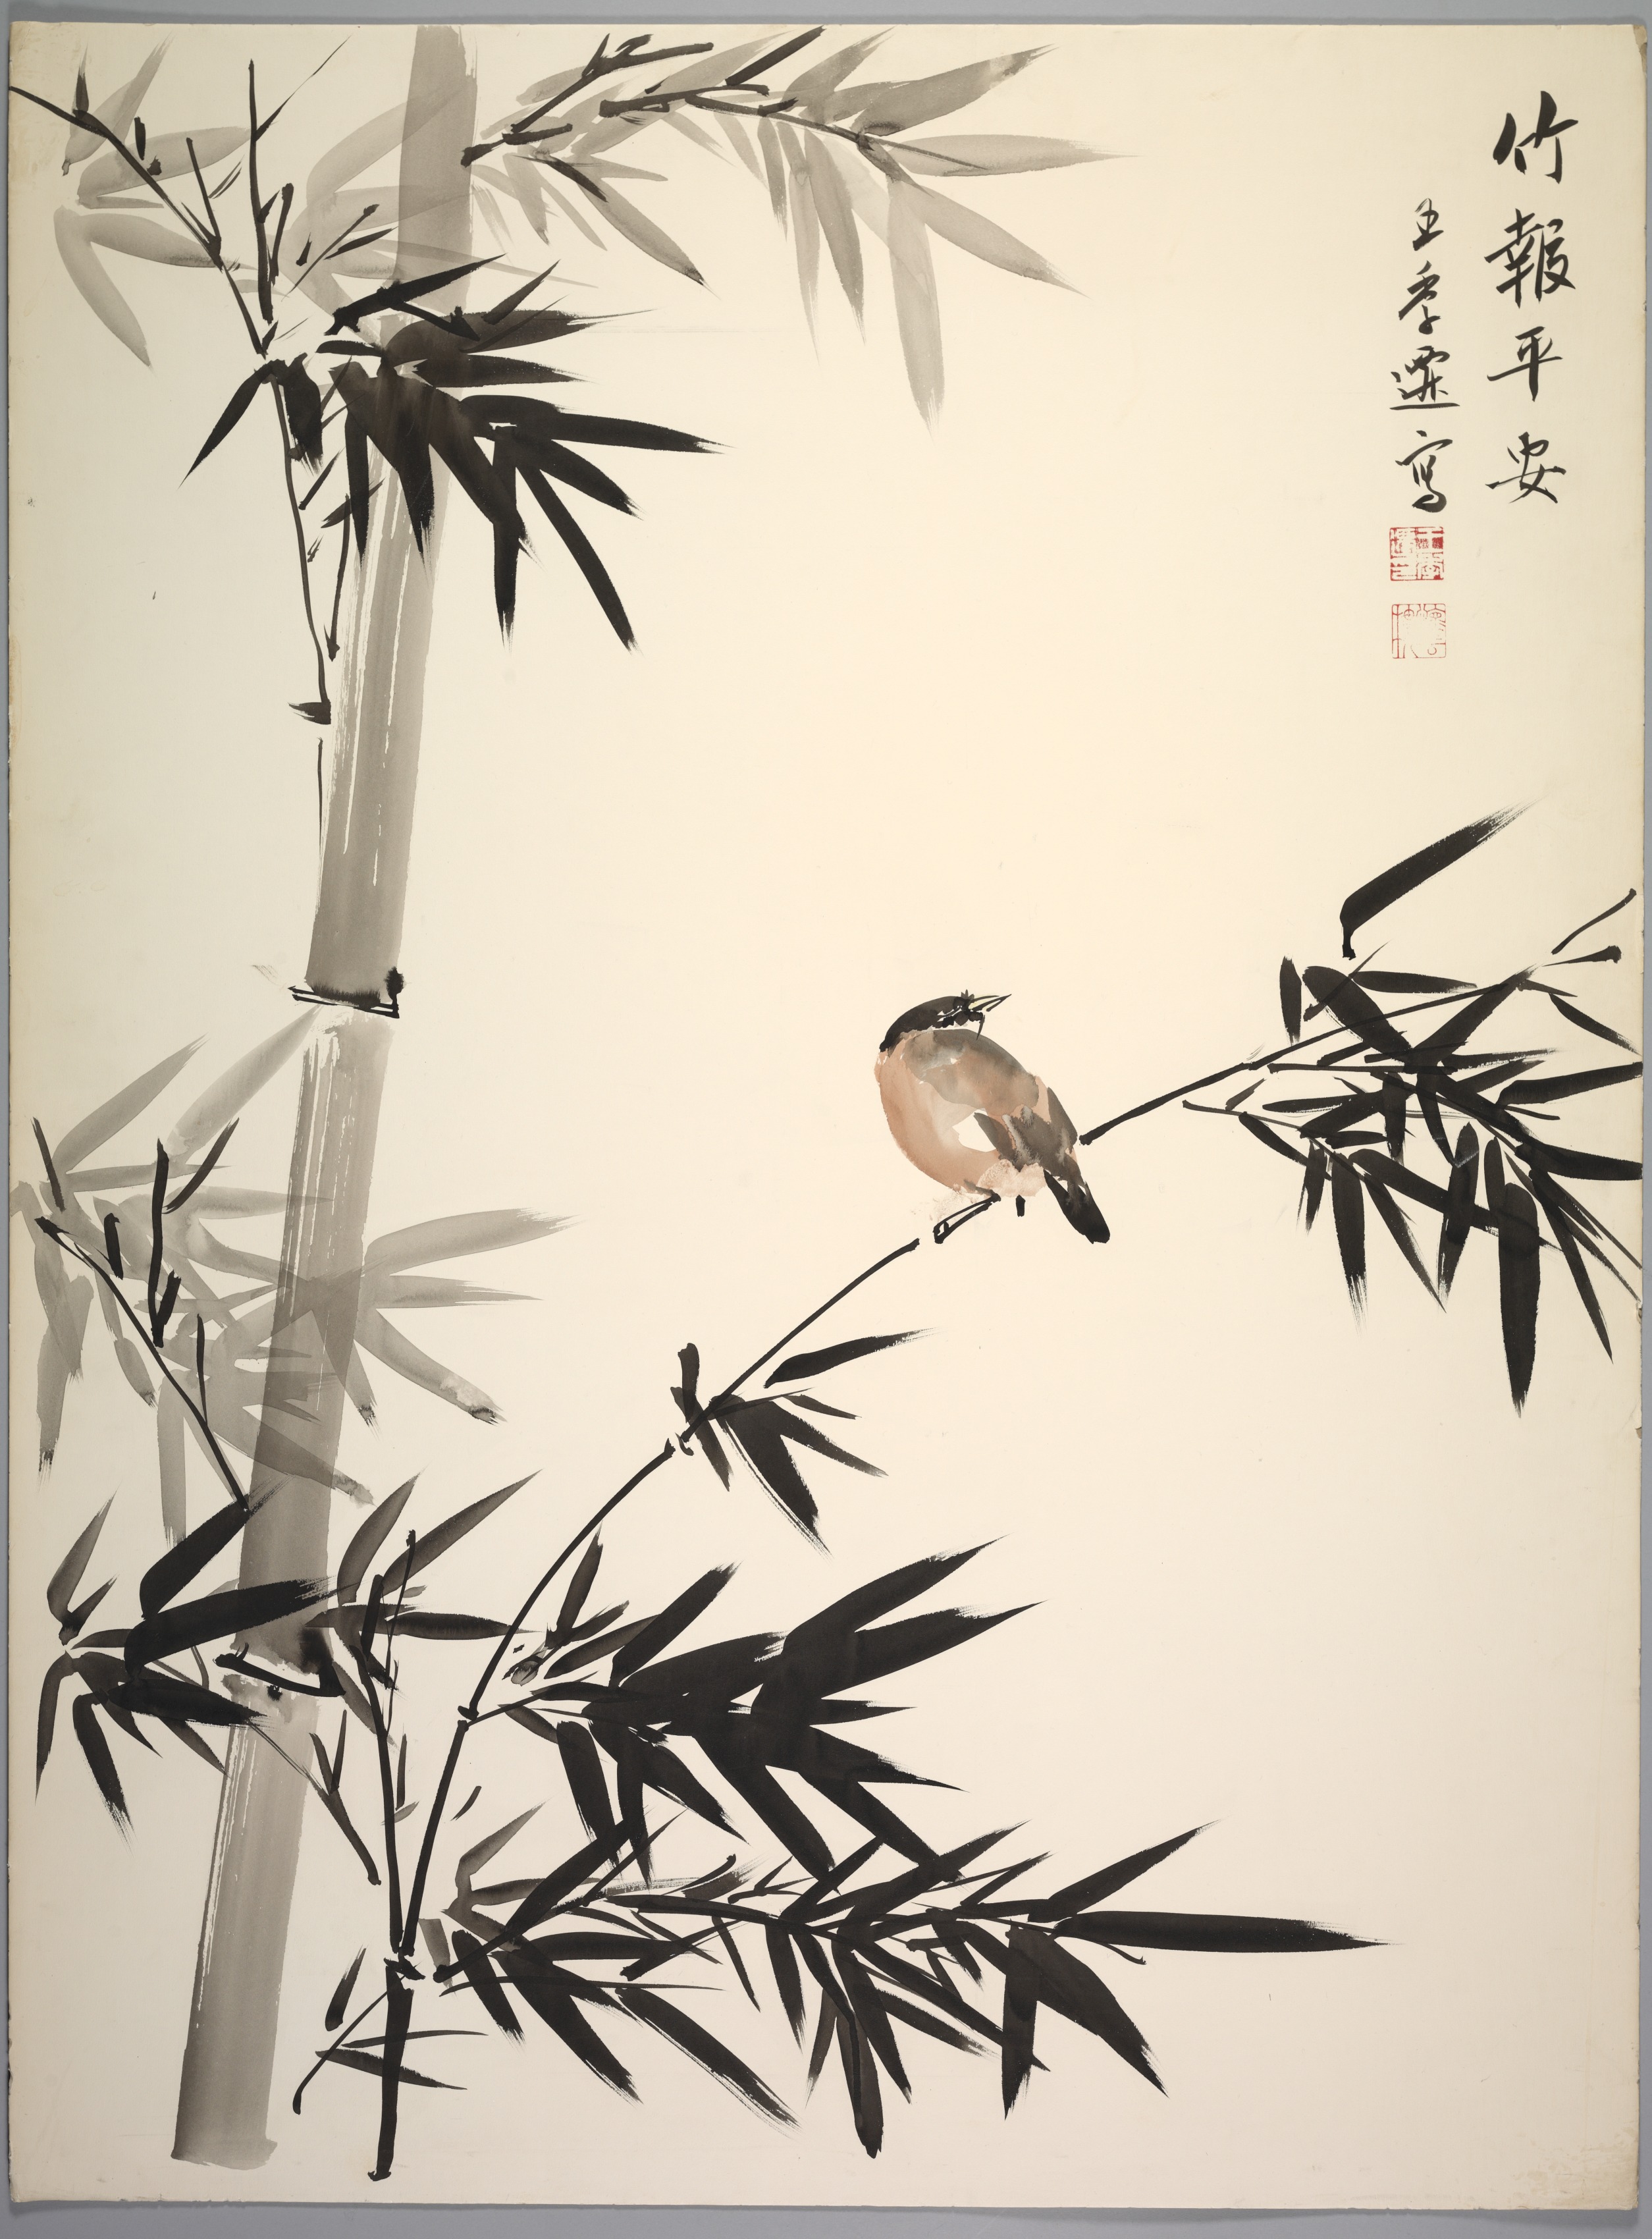 Bamboo with Bird